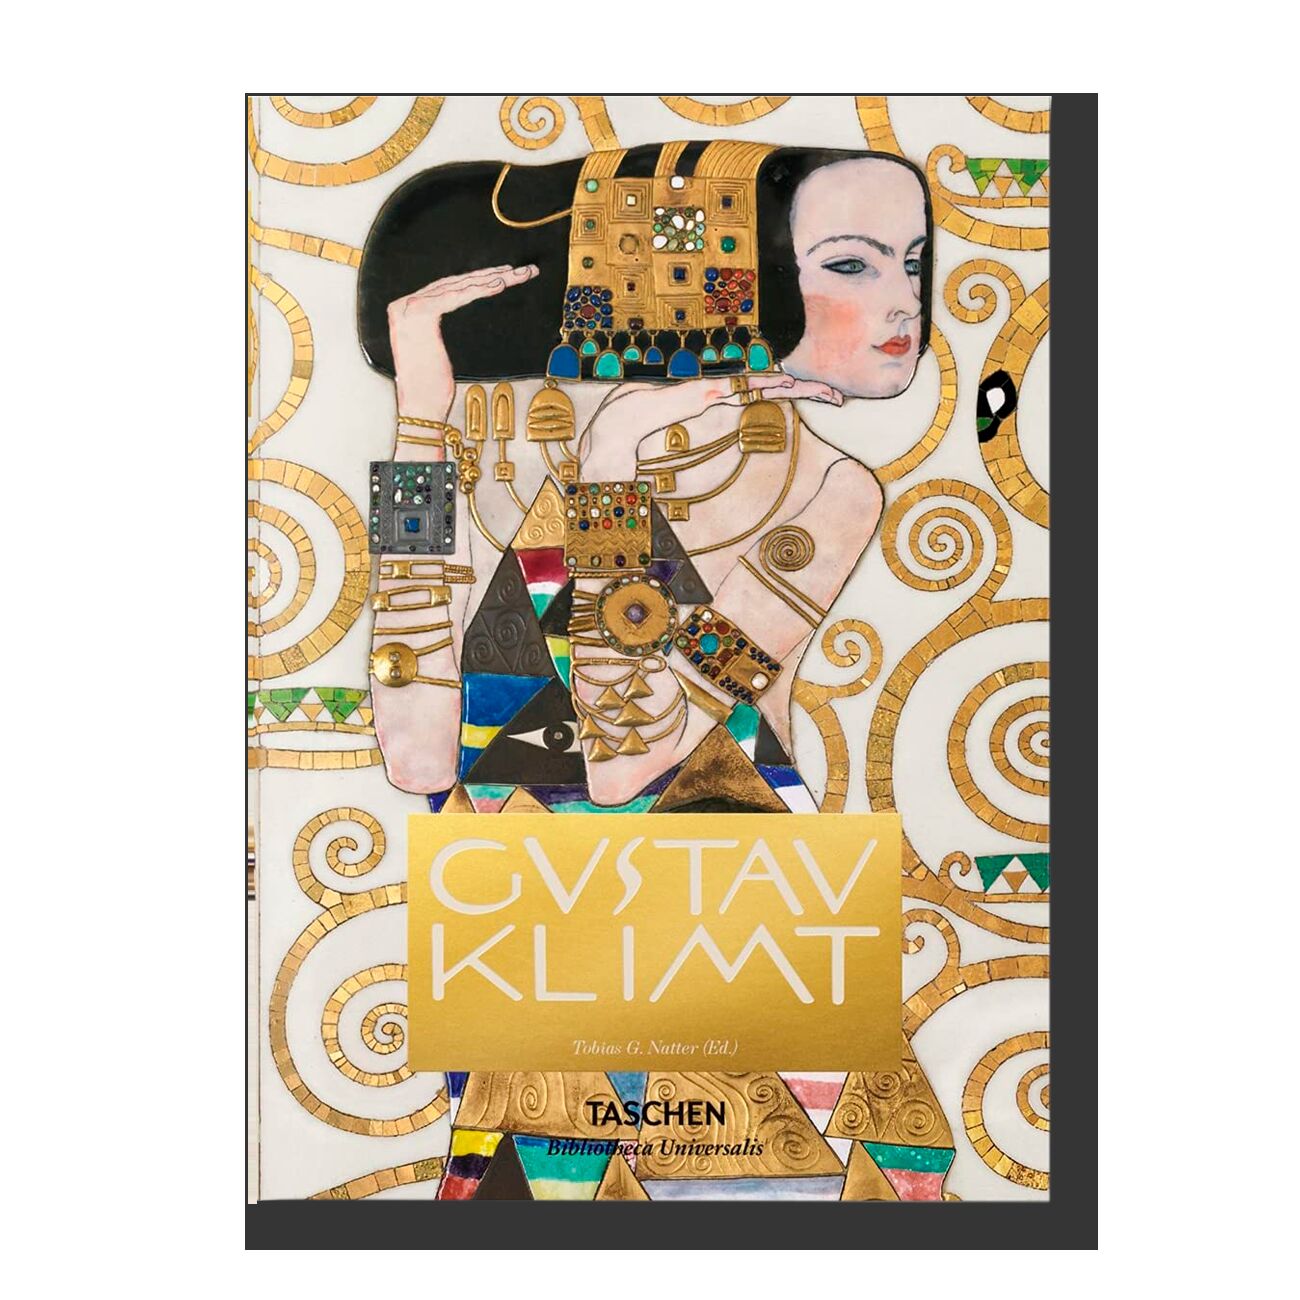 Gustav Klimt: Complete Paintings (Bibliotheca Universalis)